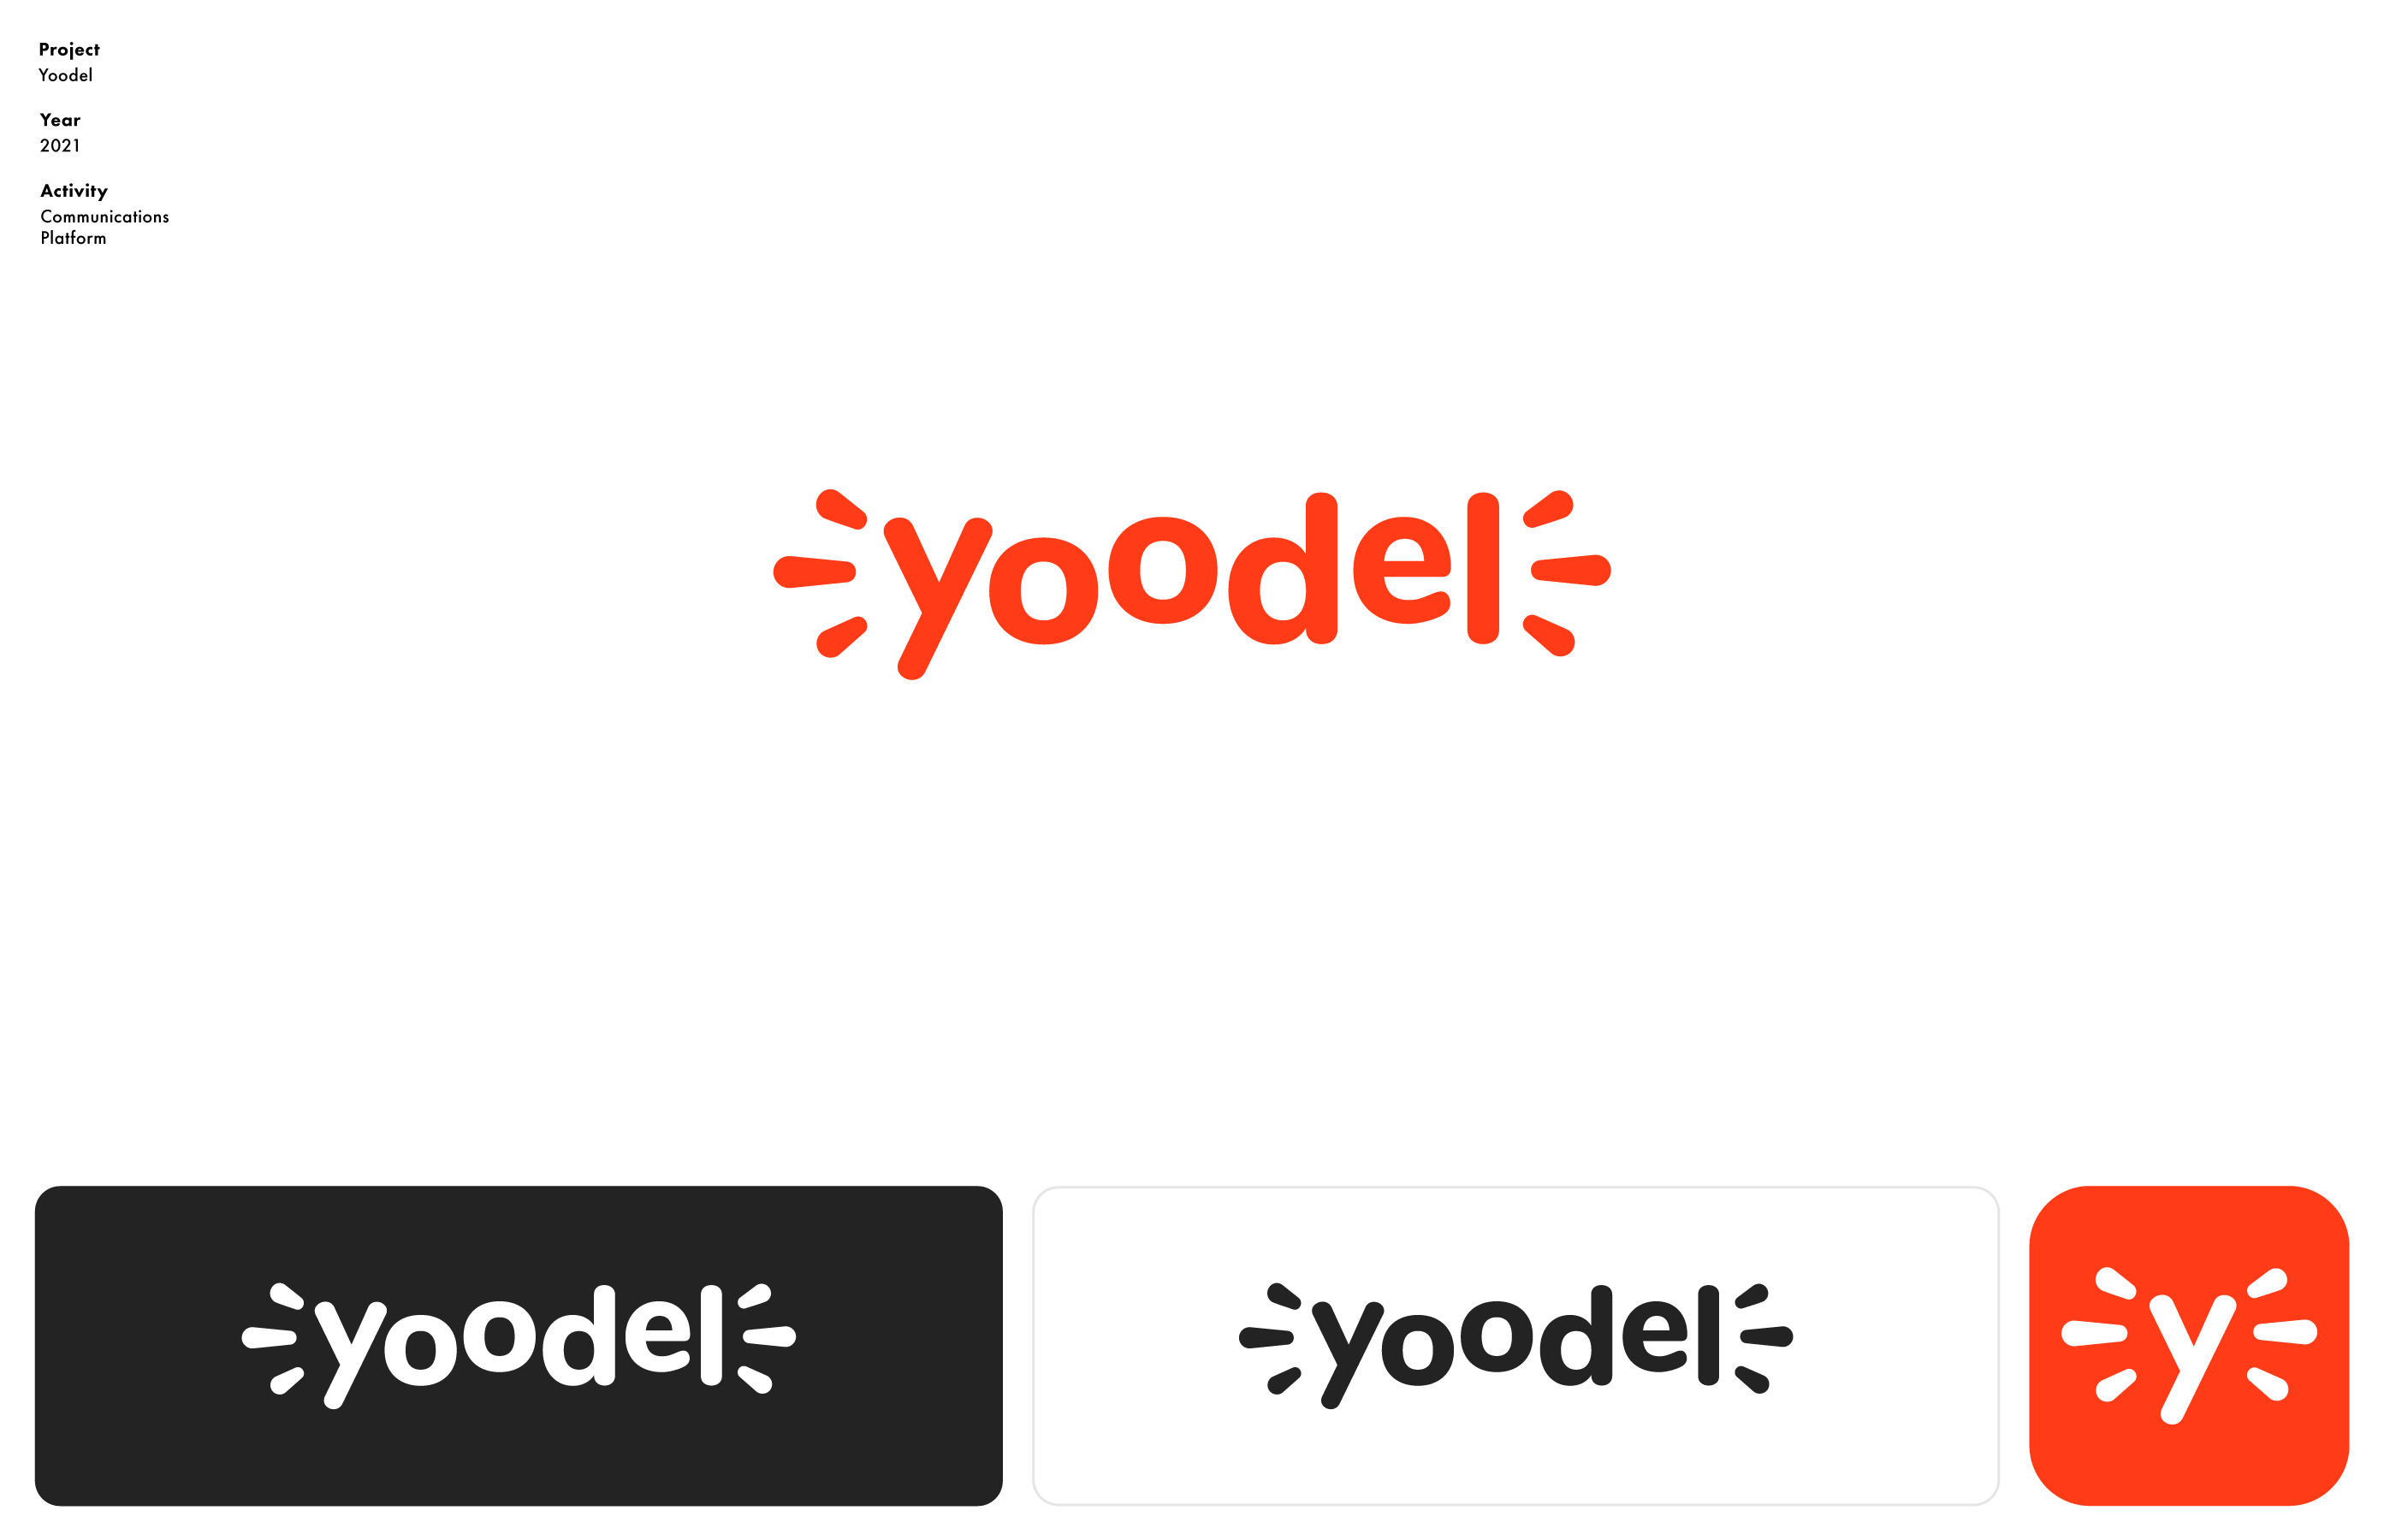 wordmark logotype for yoodel communications platform by mihai dolganiuc design